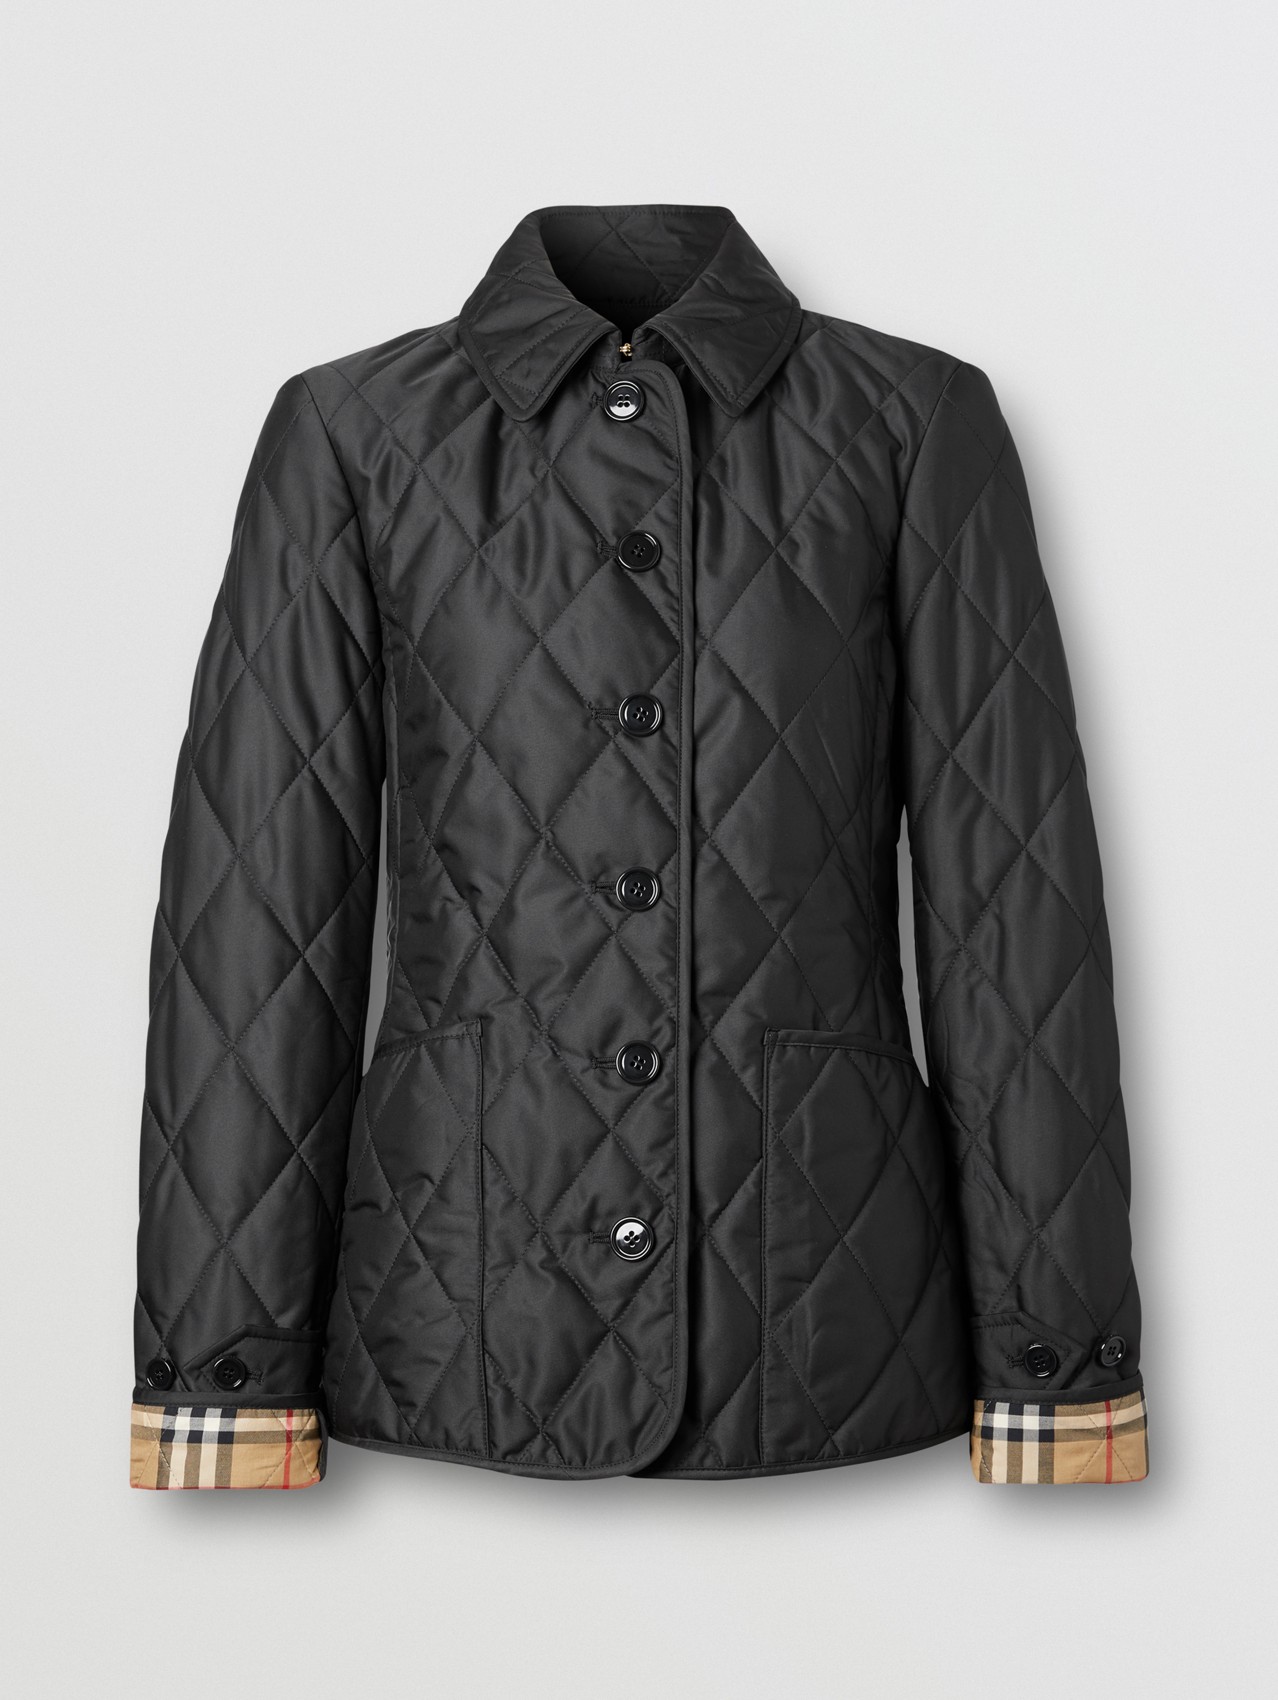 Lang voorspelling Gearceerd Women's Jackets | Leather & Bomber Jackets | Burberry® Official